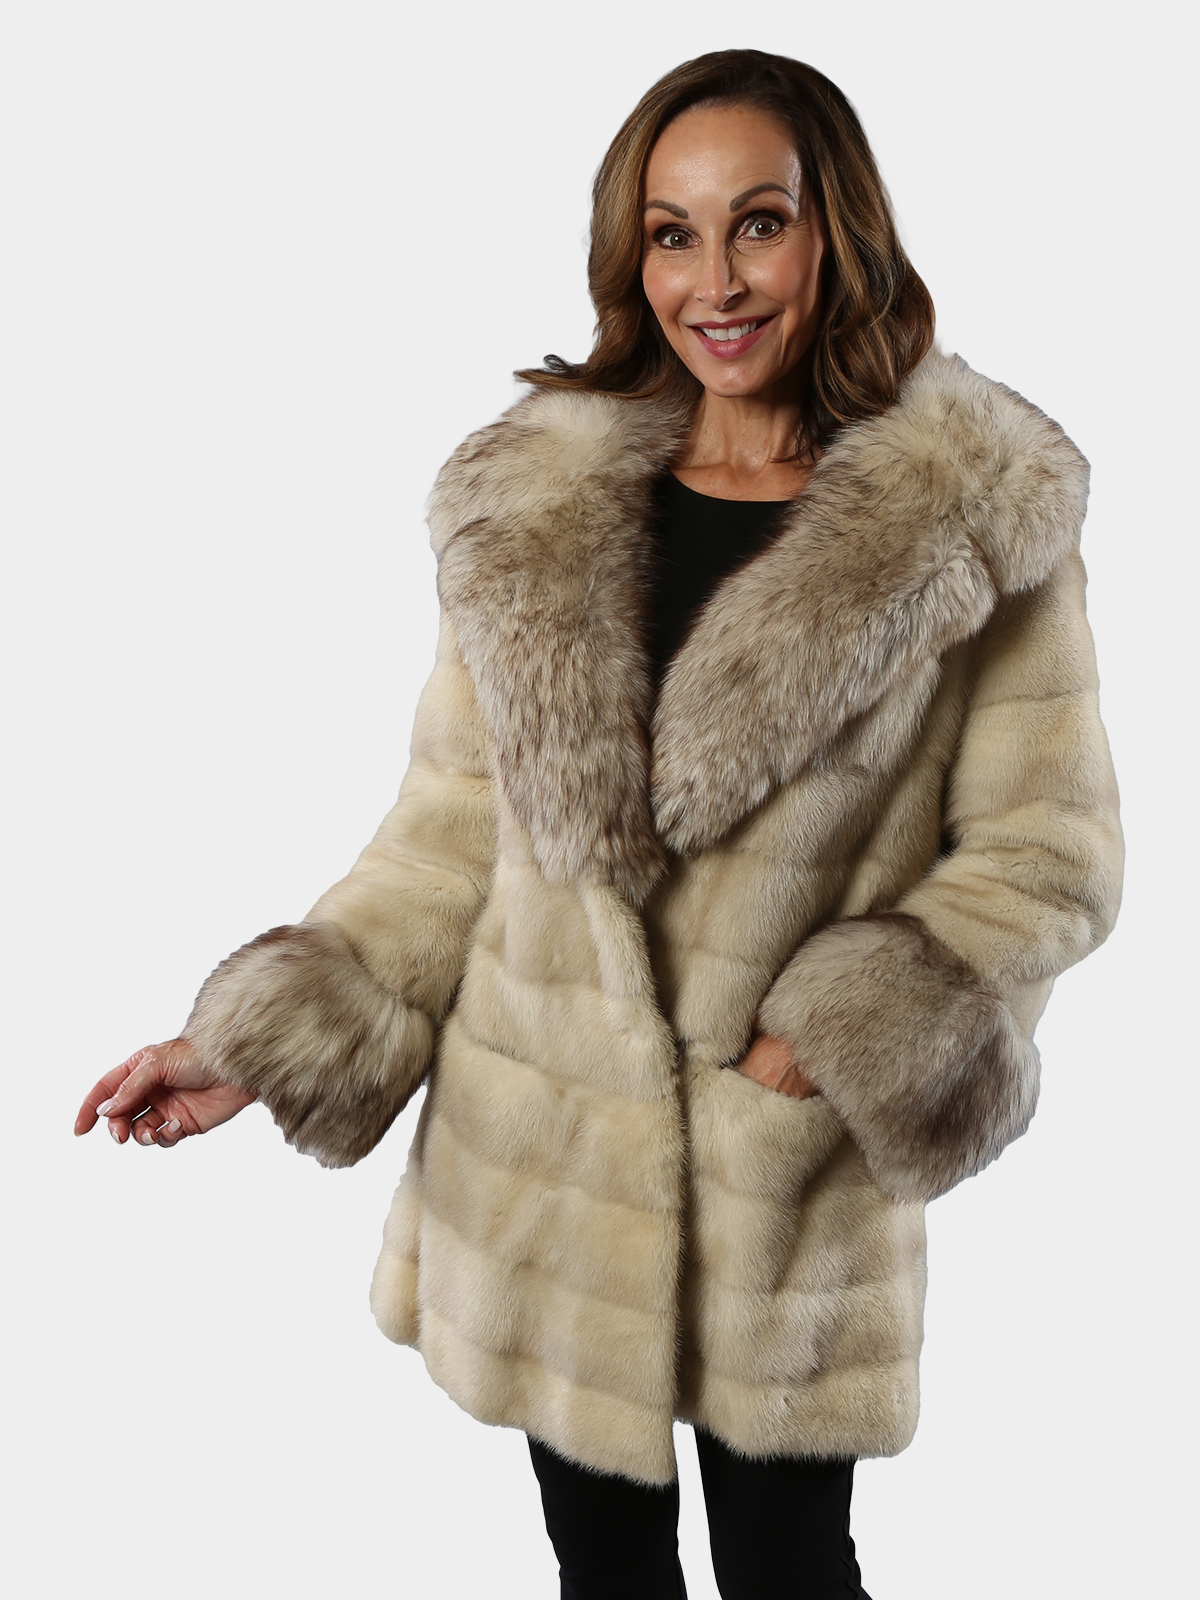 Tourmaline Female Mink Fur Jacket w/ Fox Trim (Women's Small) - Estate Furs